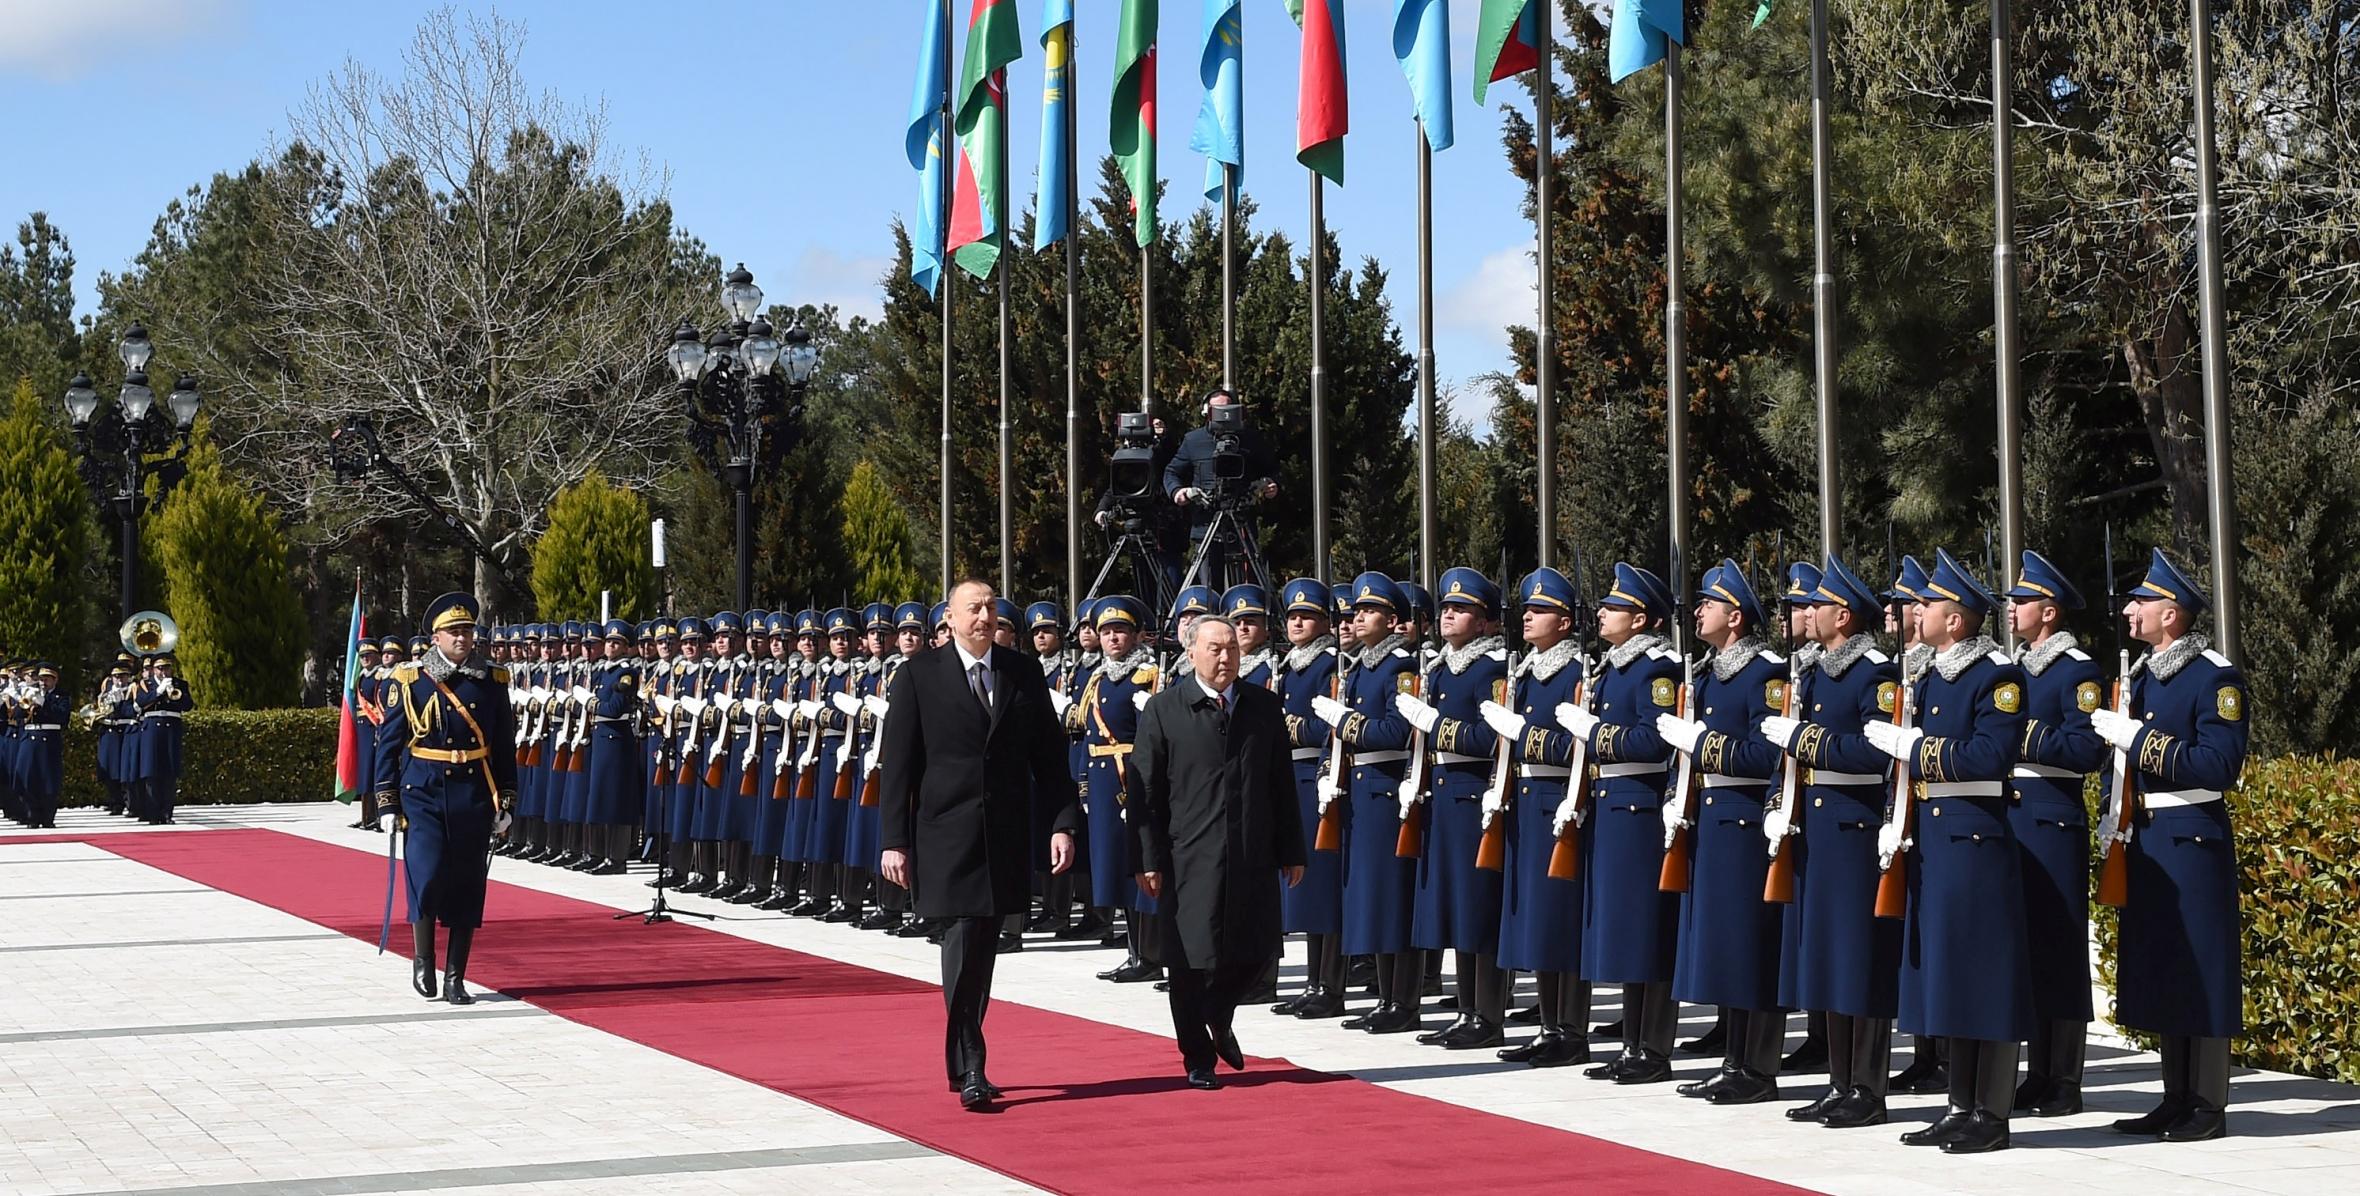 Official welcome ceremony was held for Kazakh President Nursultan Nazarbayev